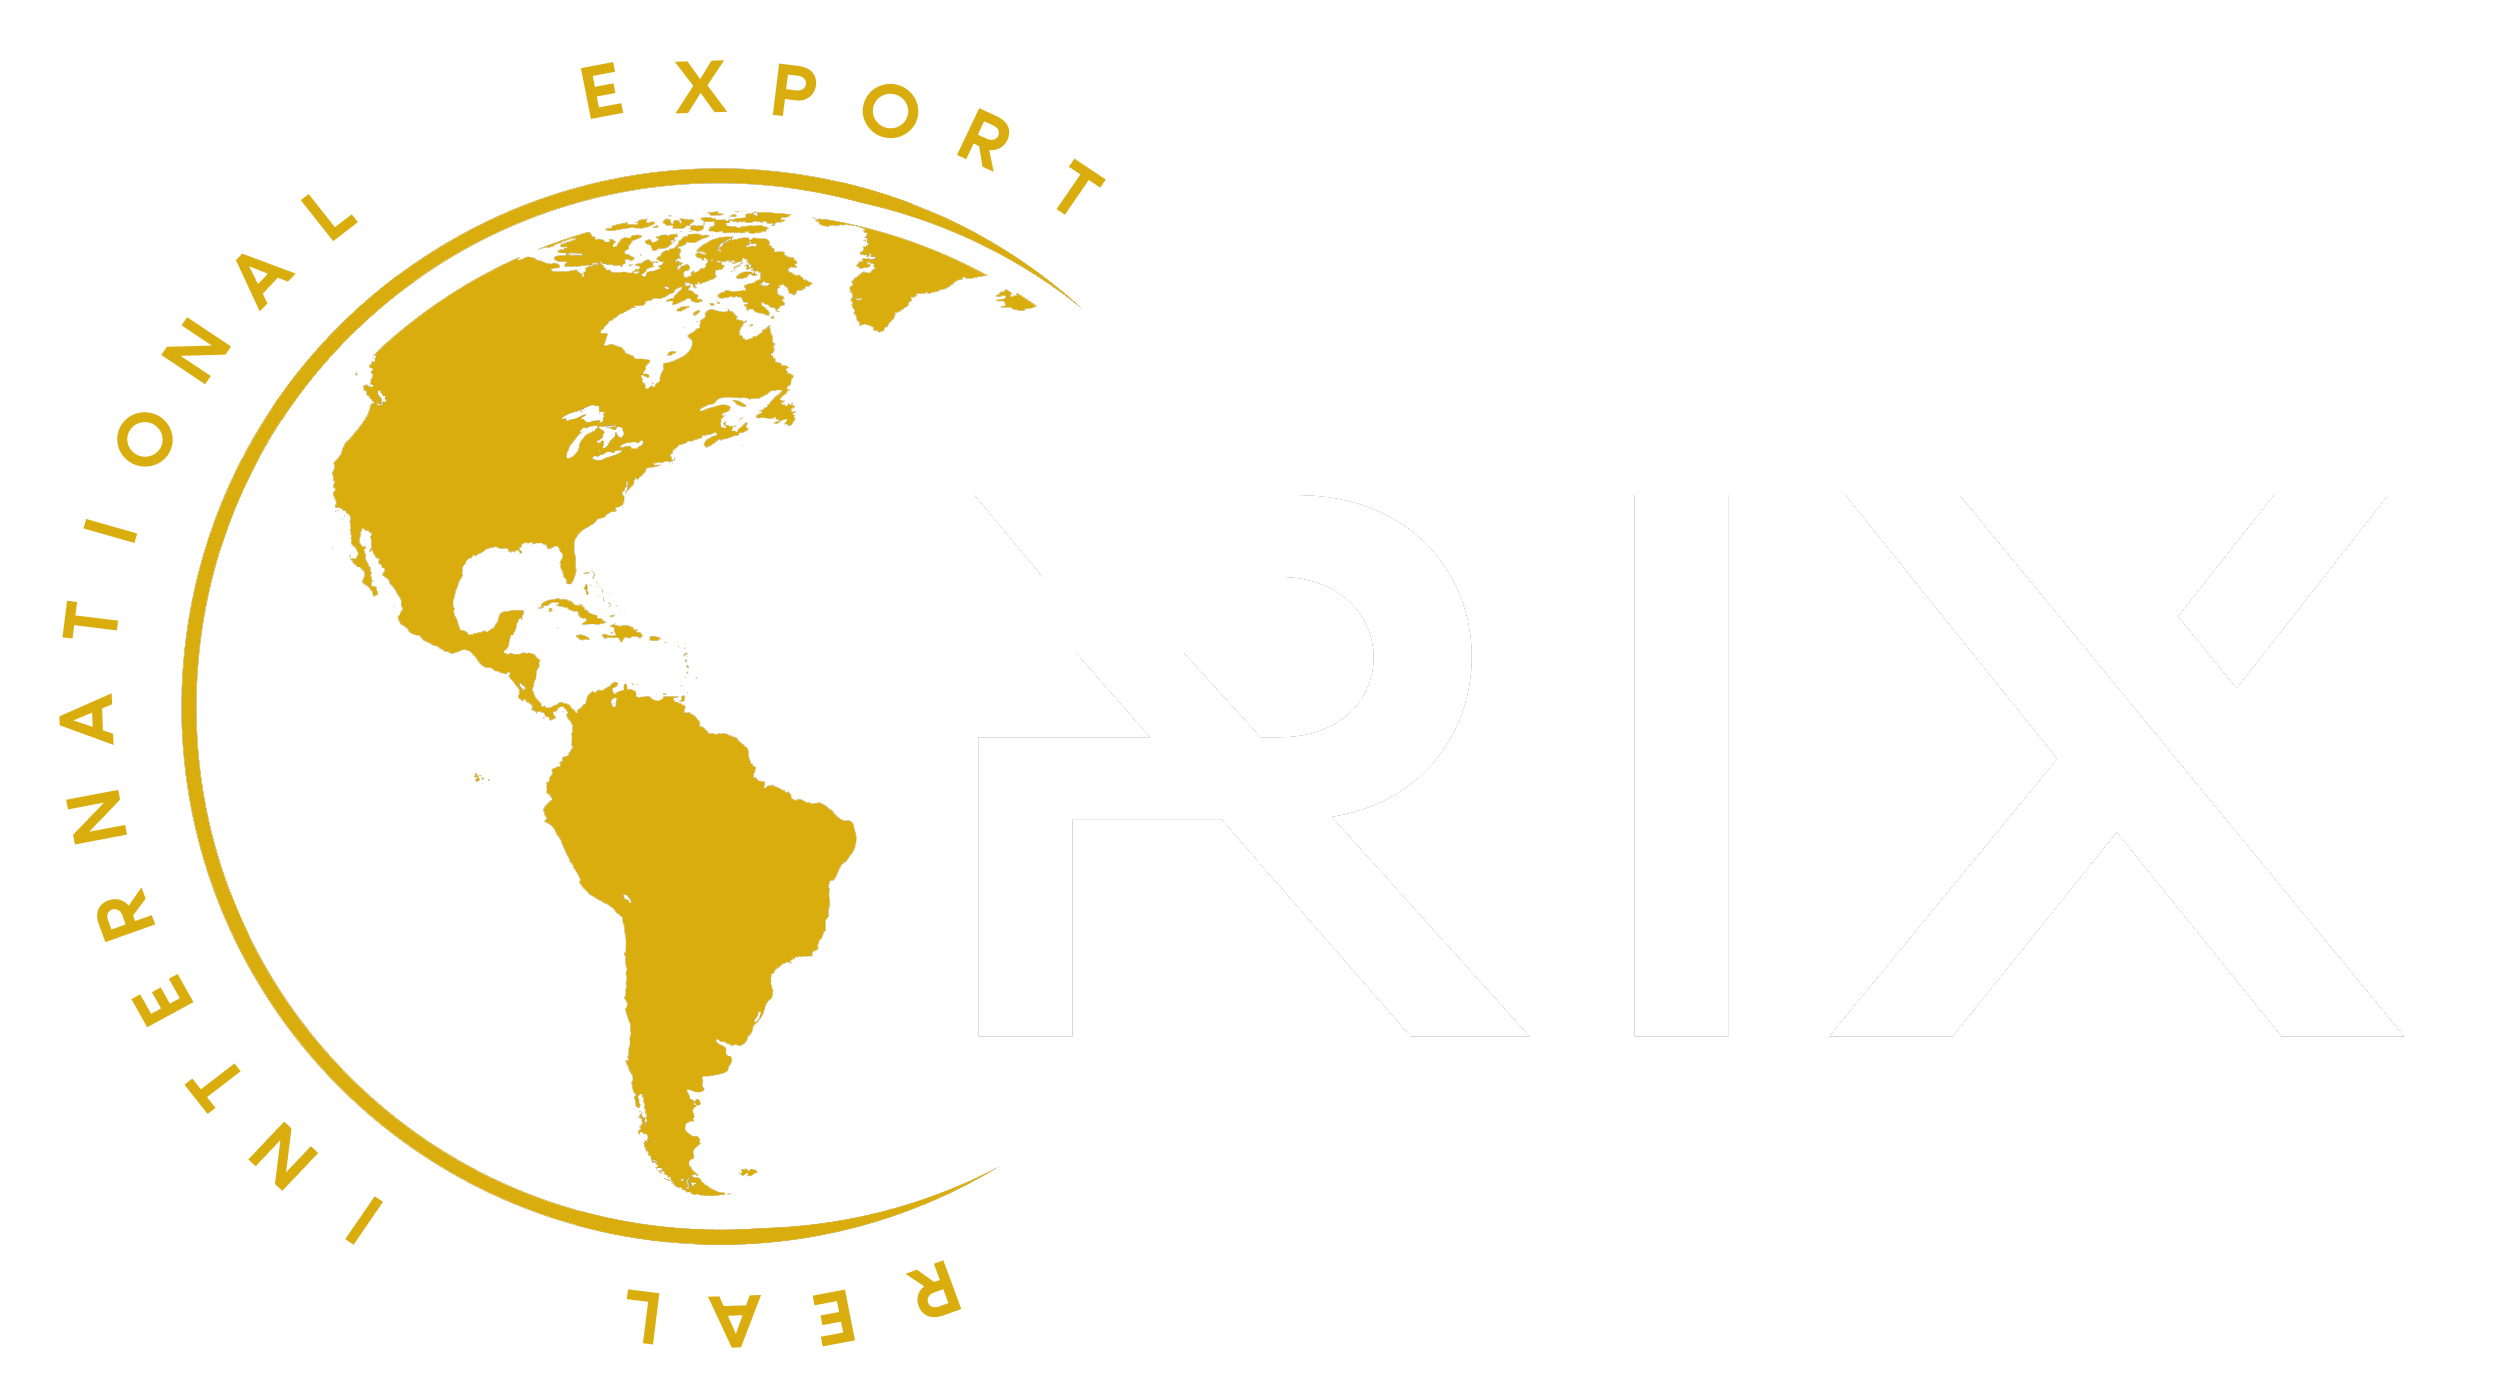 Real International Export